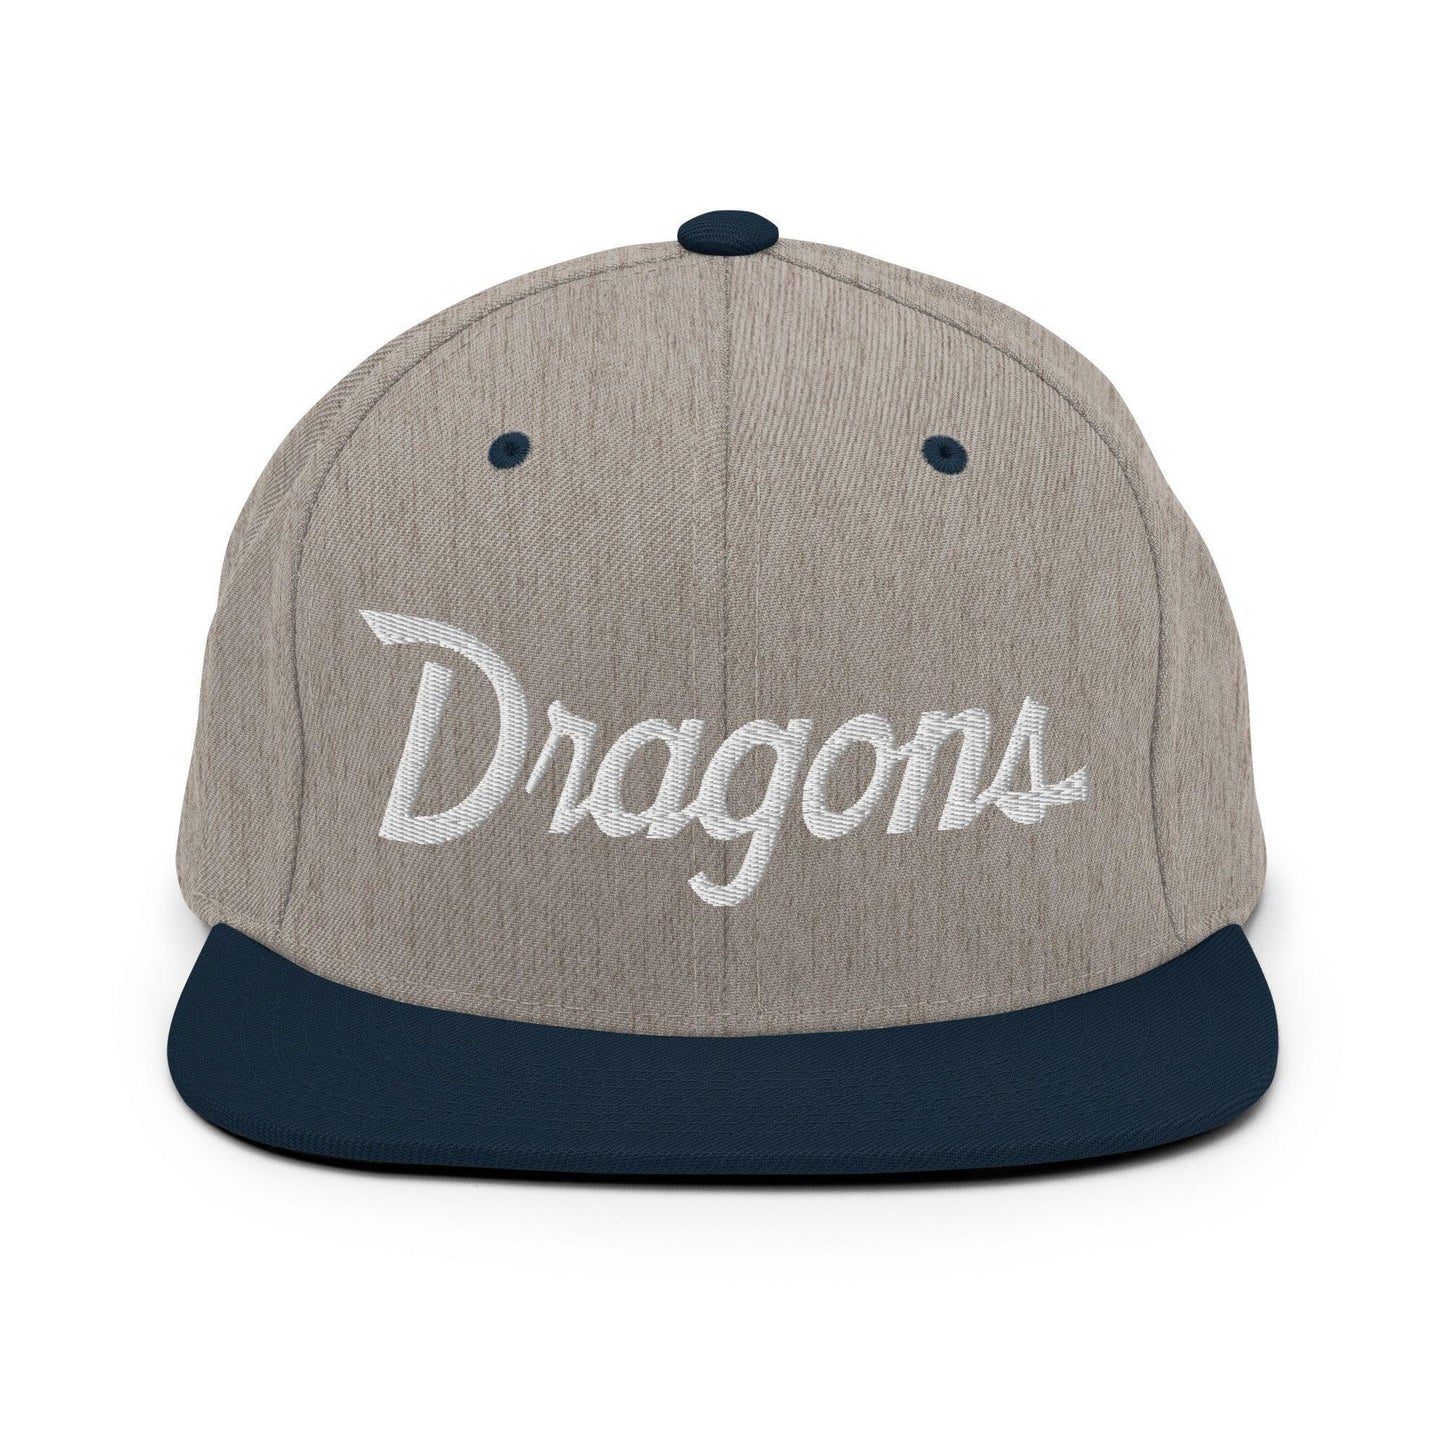 Dragons School Mascot Snapback Hat Heather Grey/ Navy